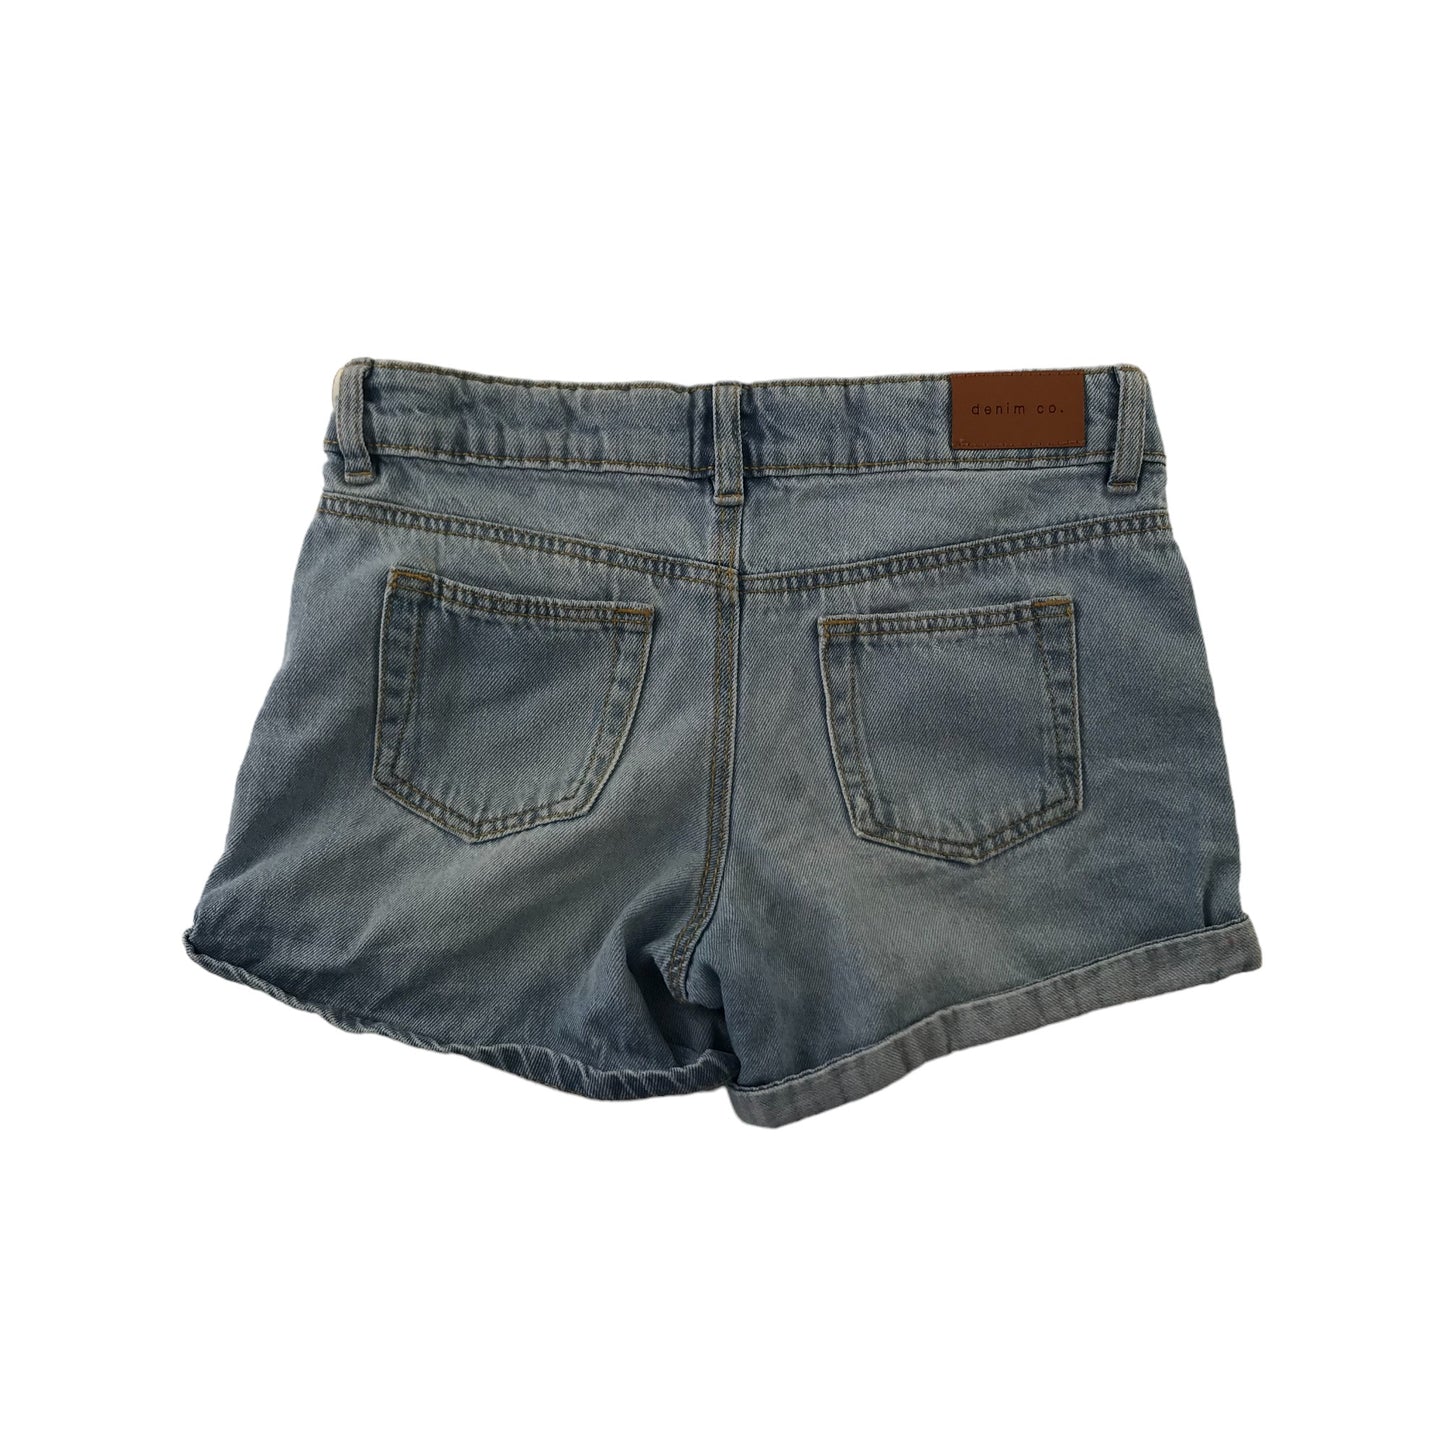 Denim Co shorts 8-9 years blue denim folded hem mid rise cotton